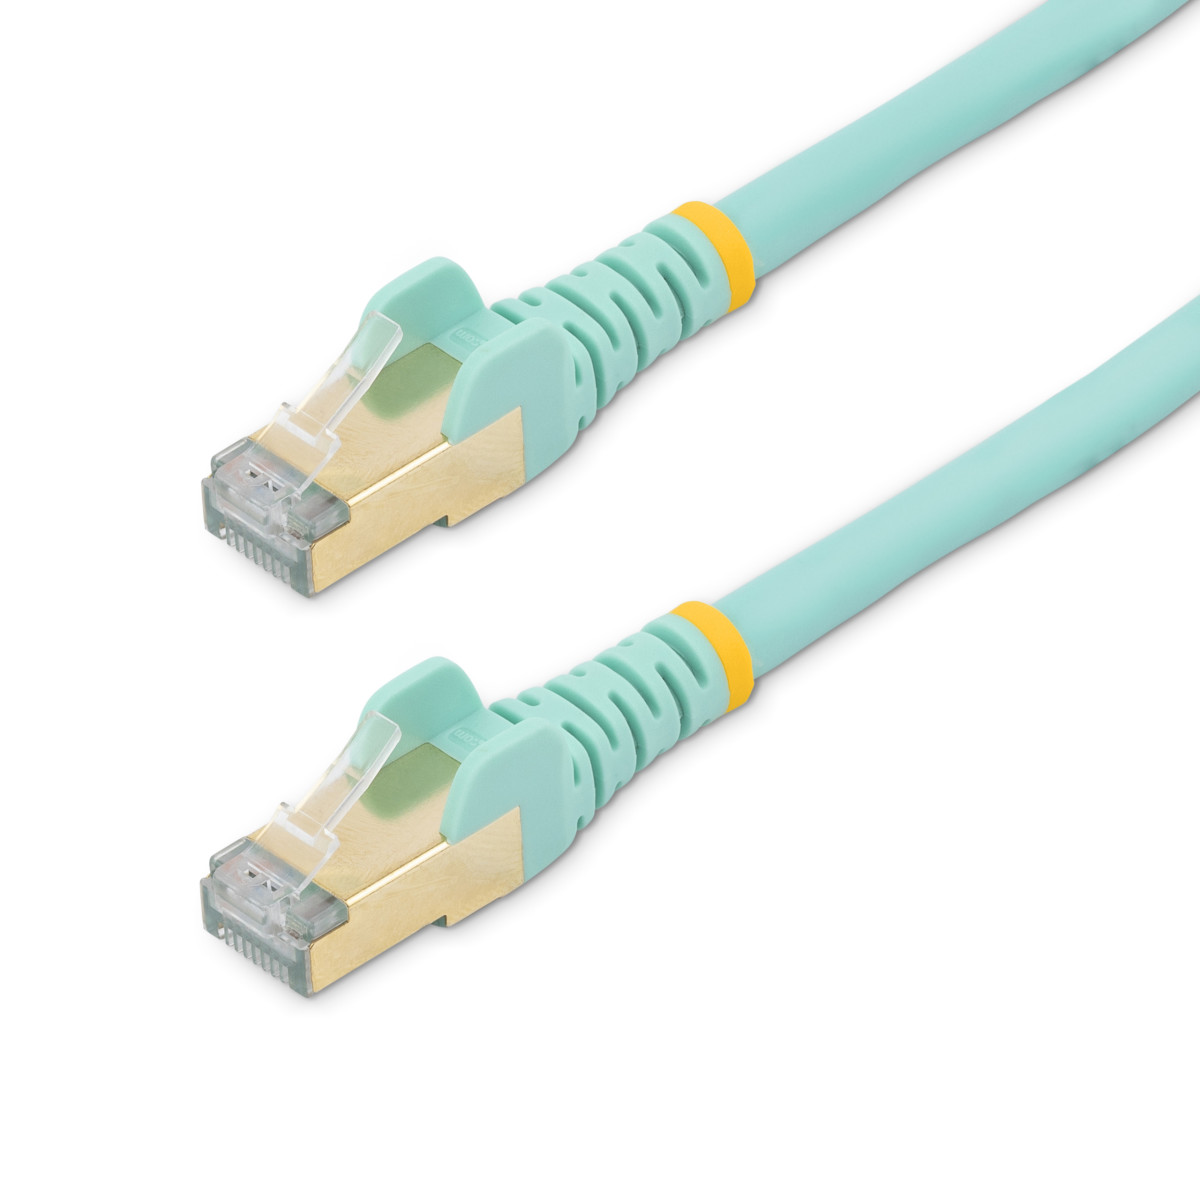 Cable - Aqua CAT6a Ethernet Cable 5m